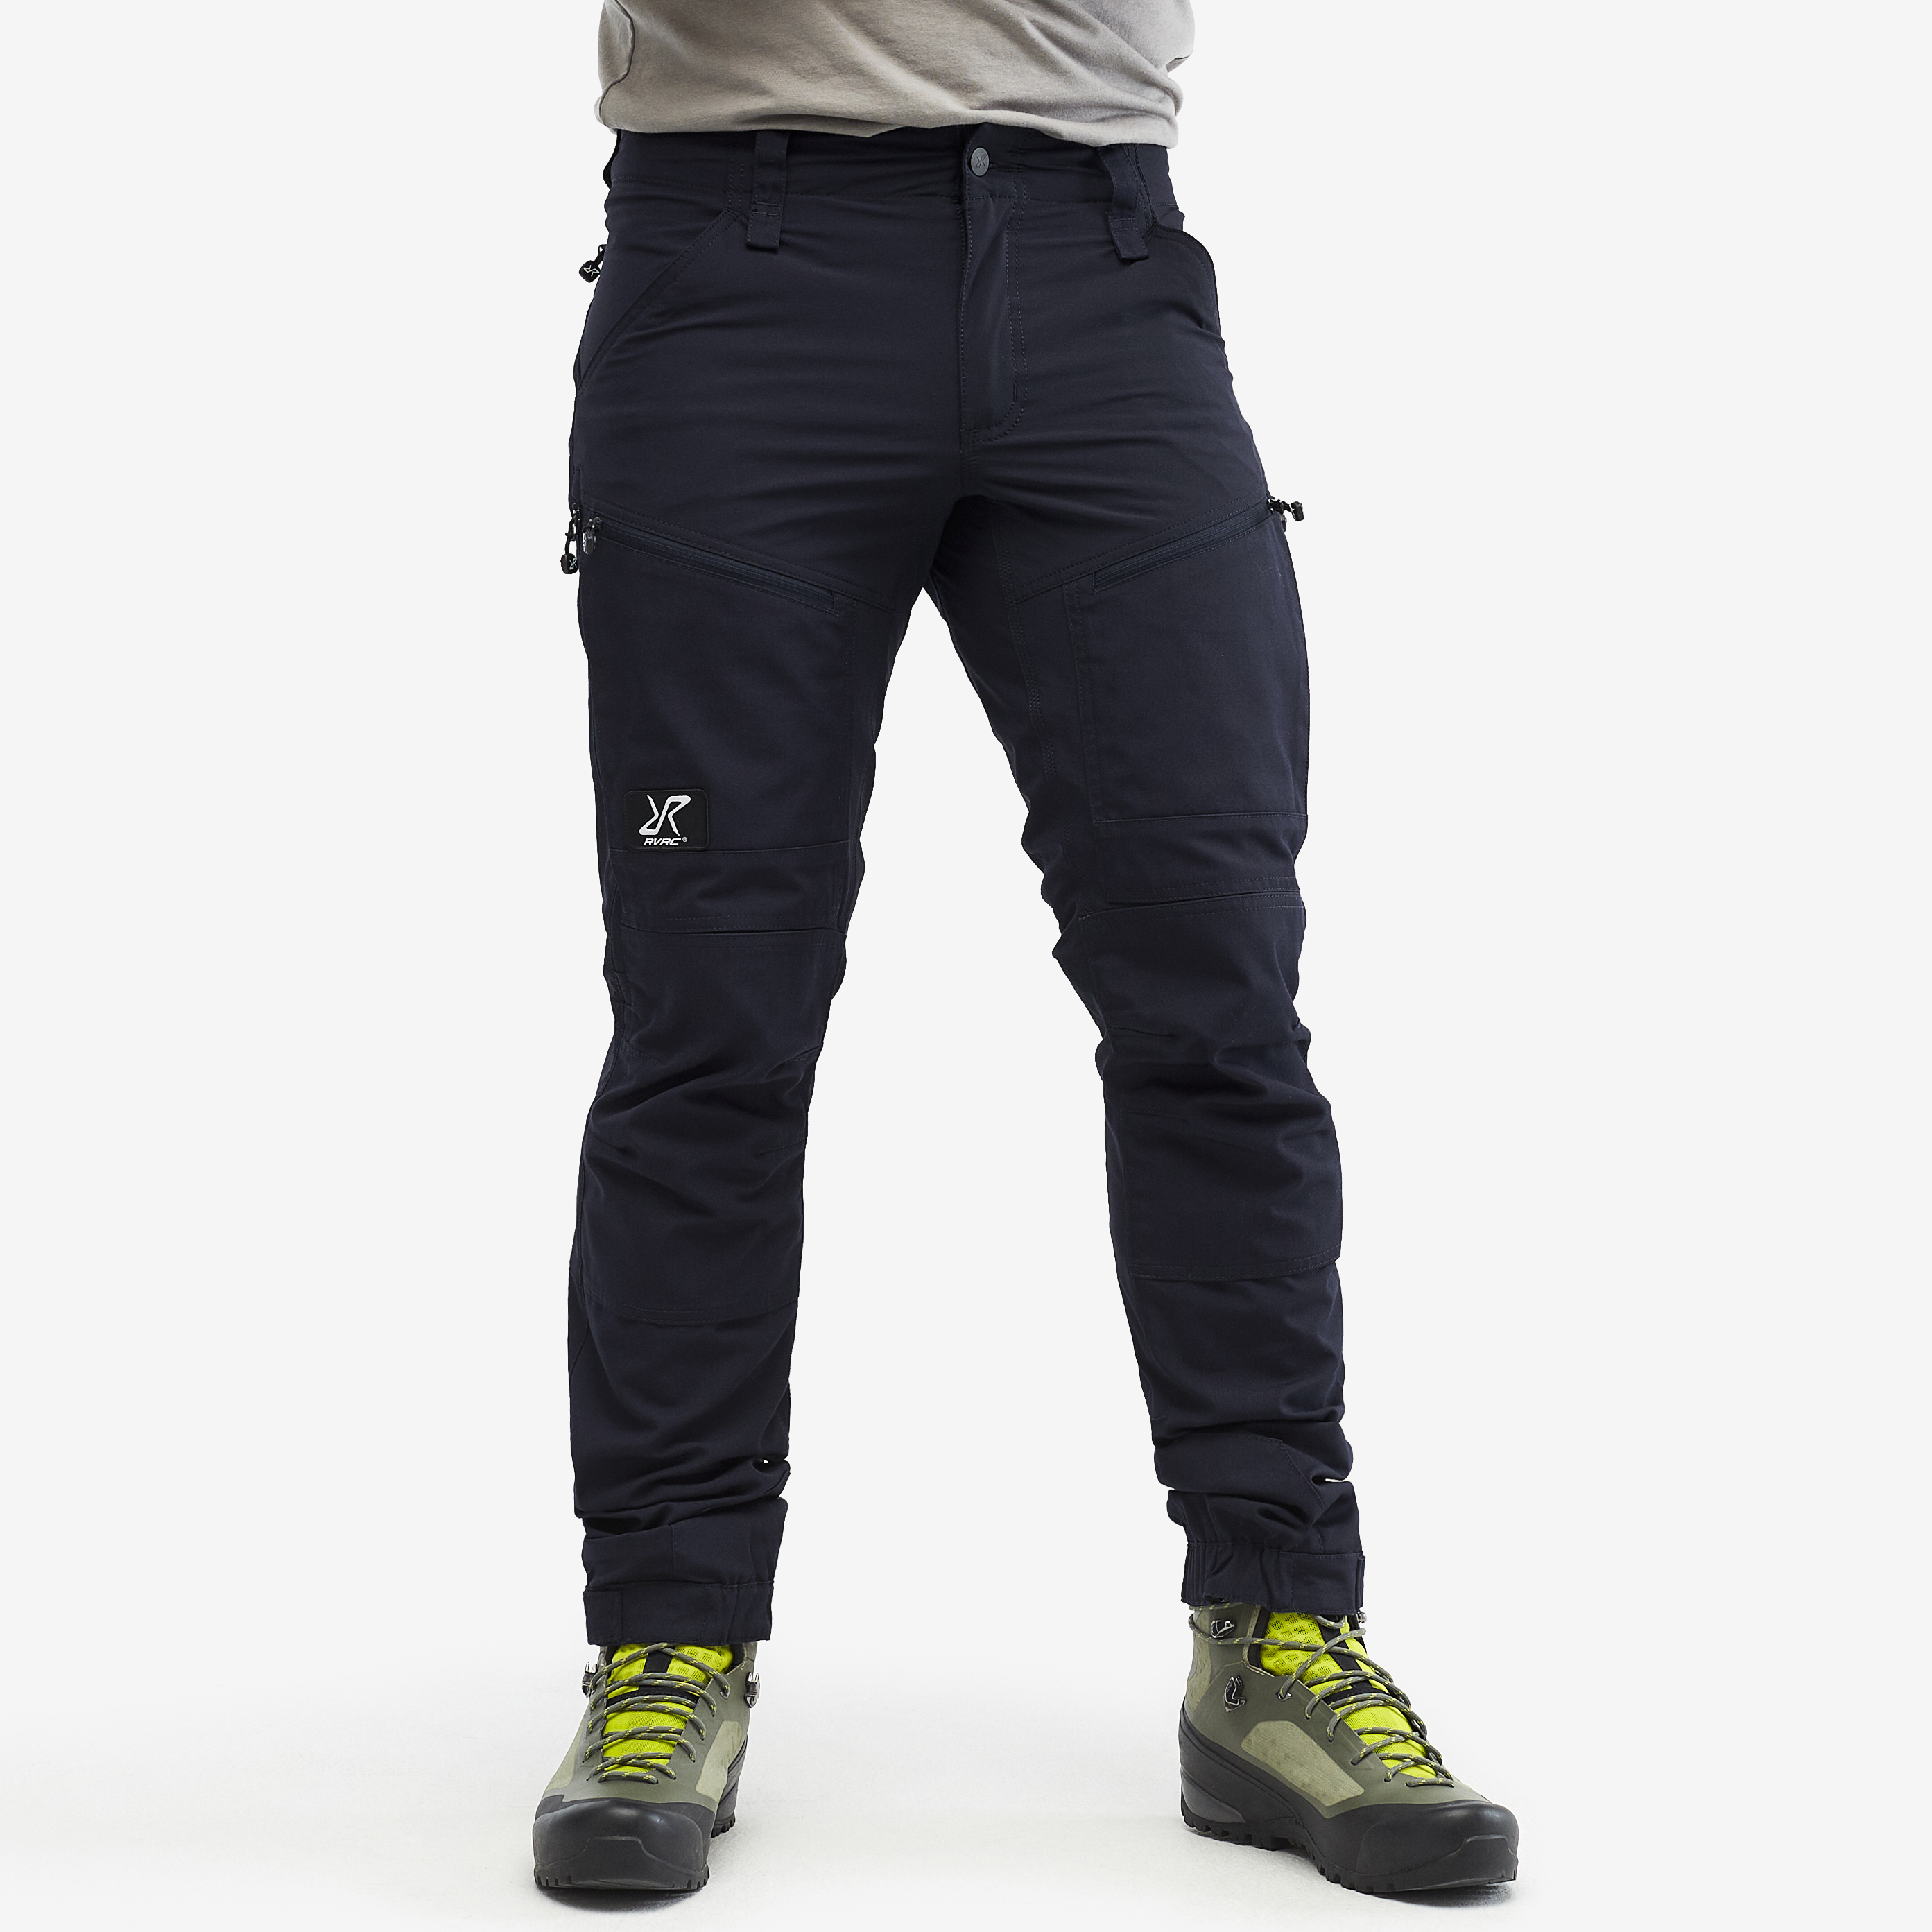 RVRC GP Pro hiking pants for men in dark blue